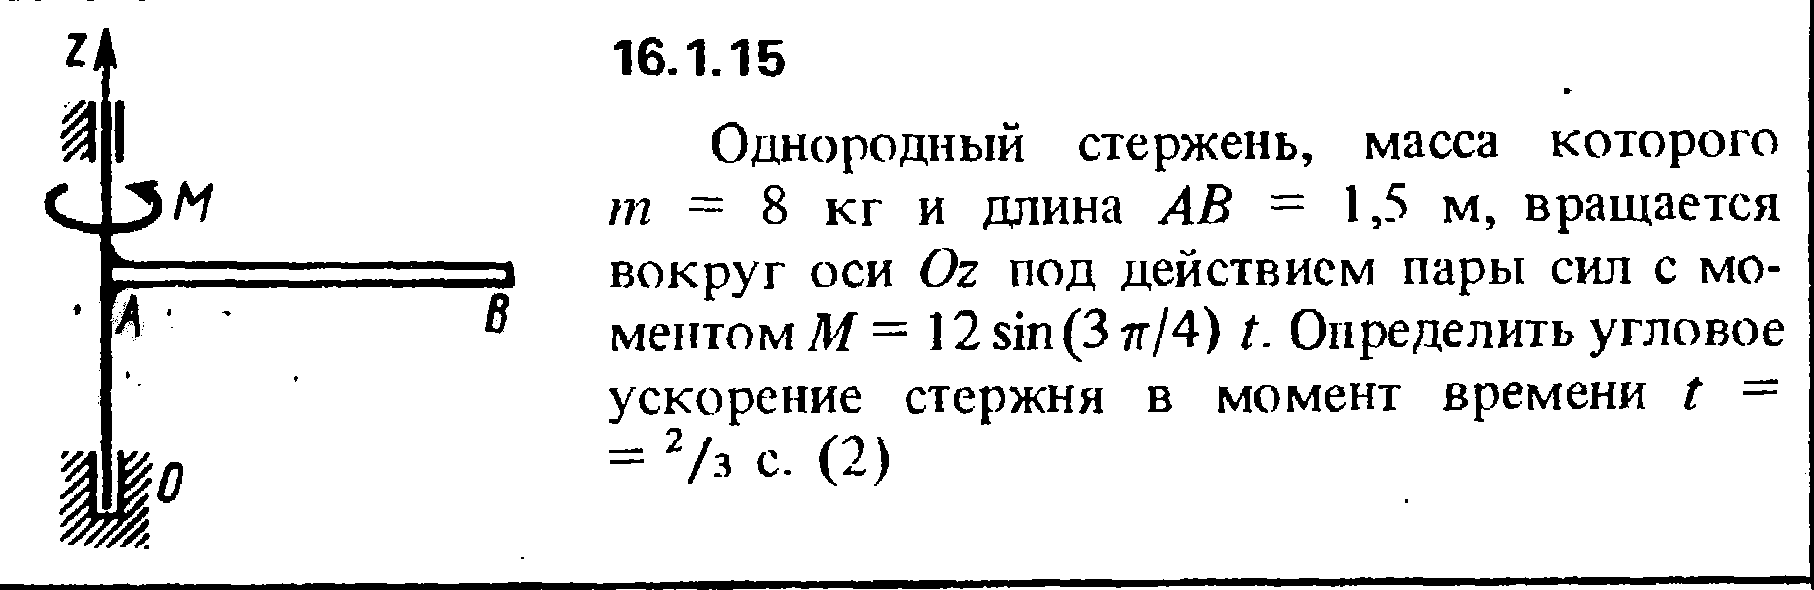 Решение задачи 16.1.15 из сборника Кепе О.Е. 1989 года